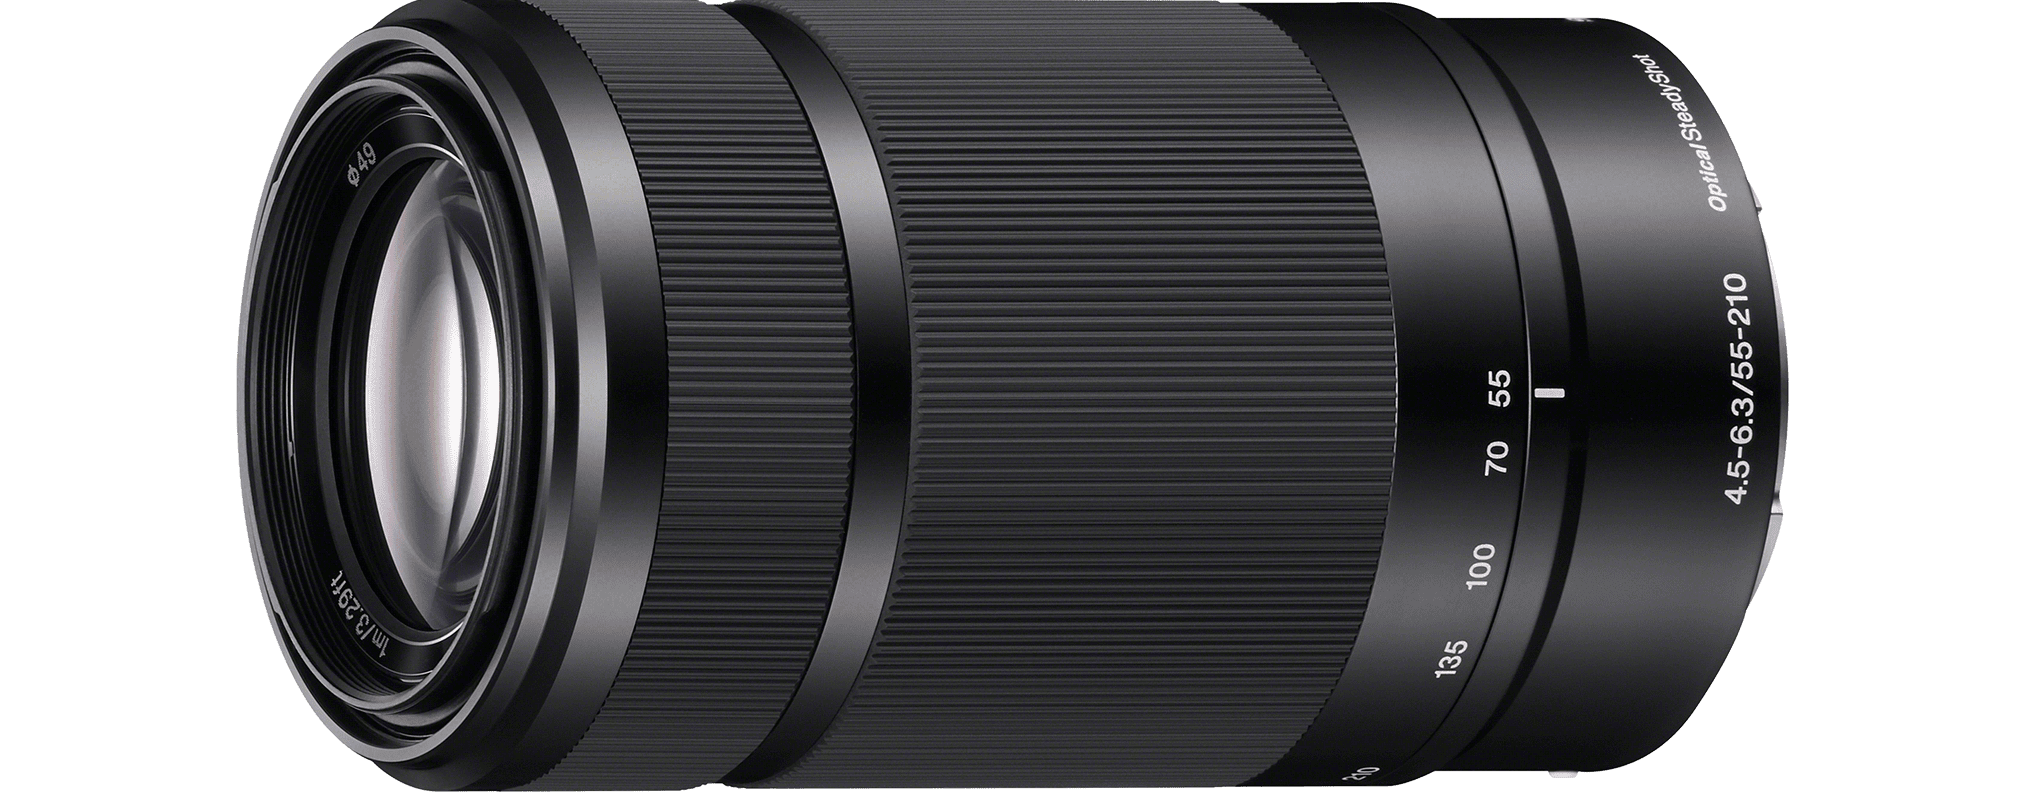 Sony E 55-210mm F4.5-6.3 OSS Bulk Silver SEL55210 E-mount Stock in EU 